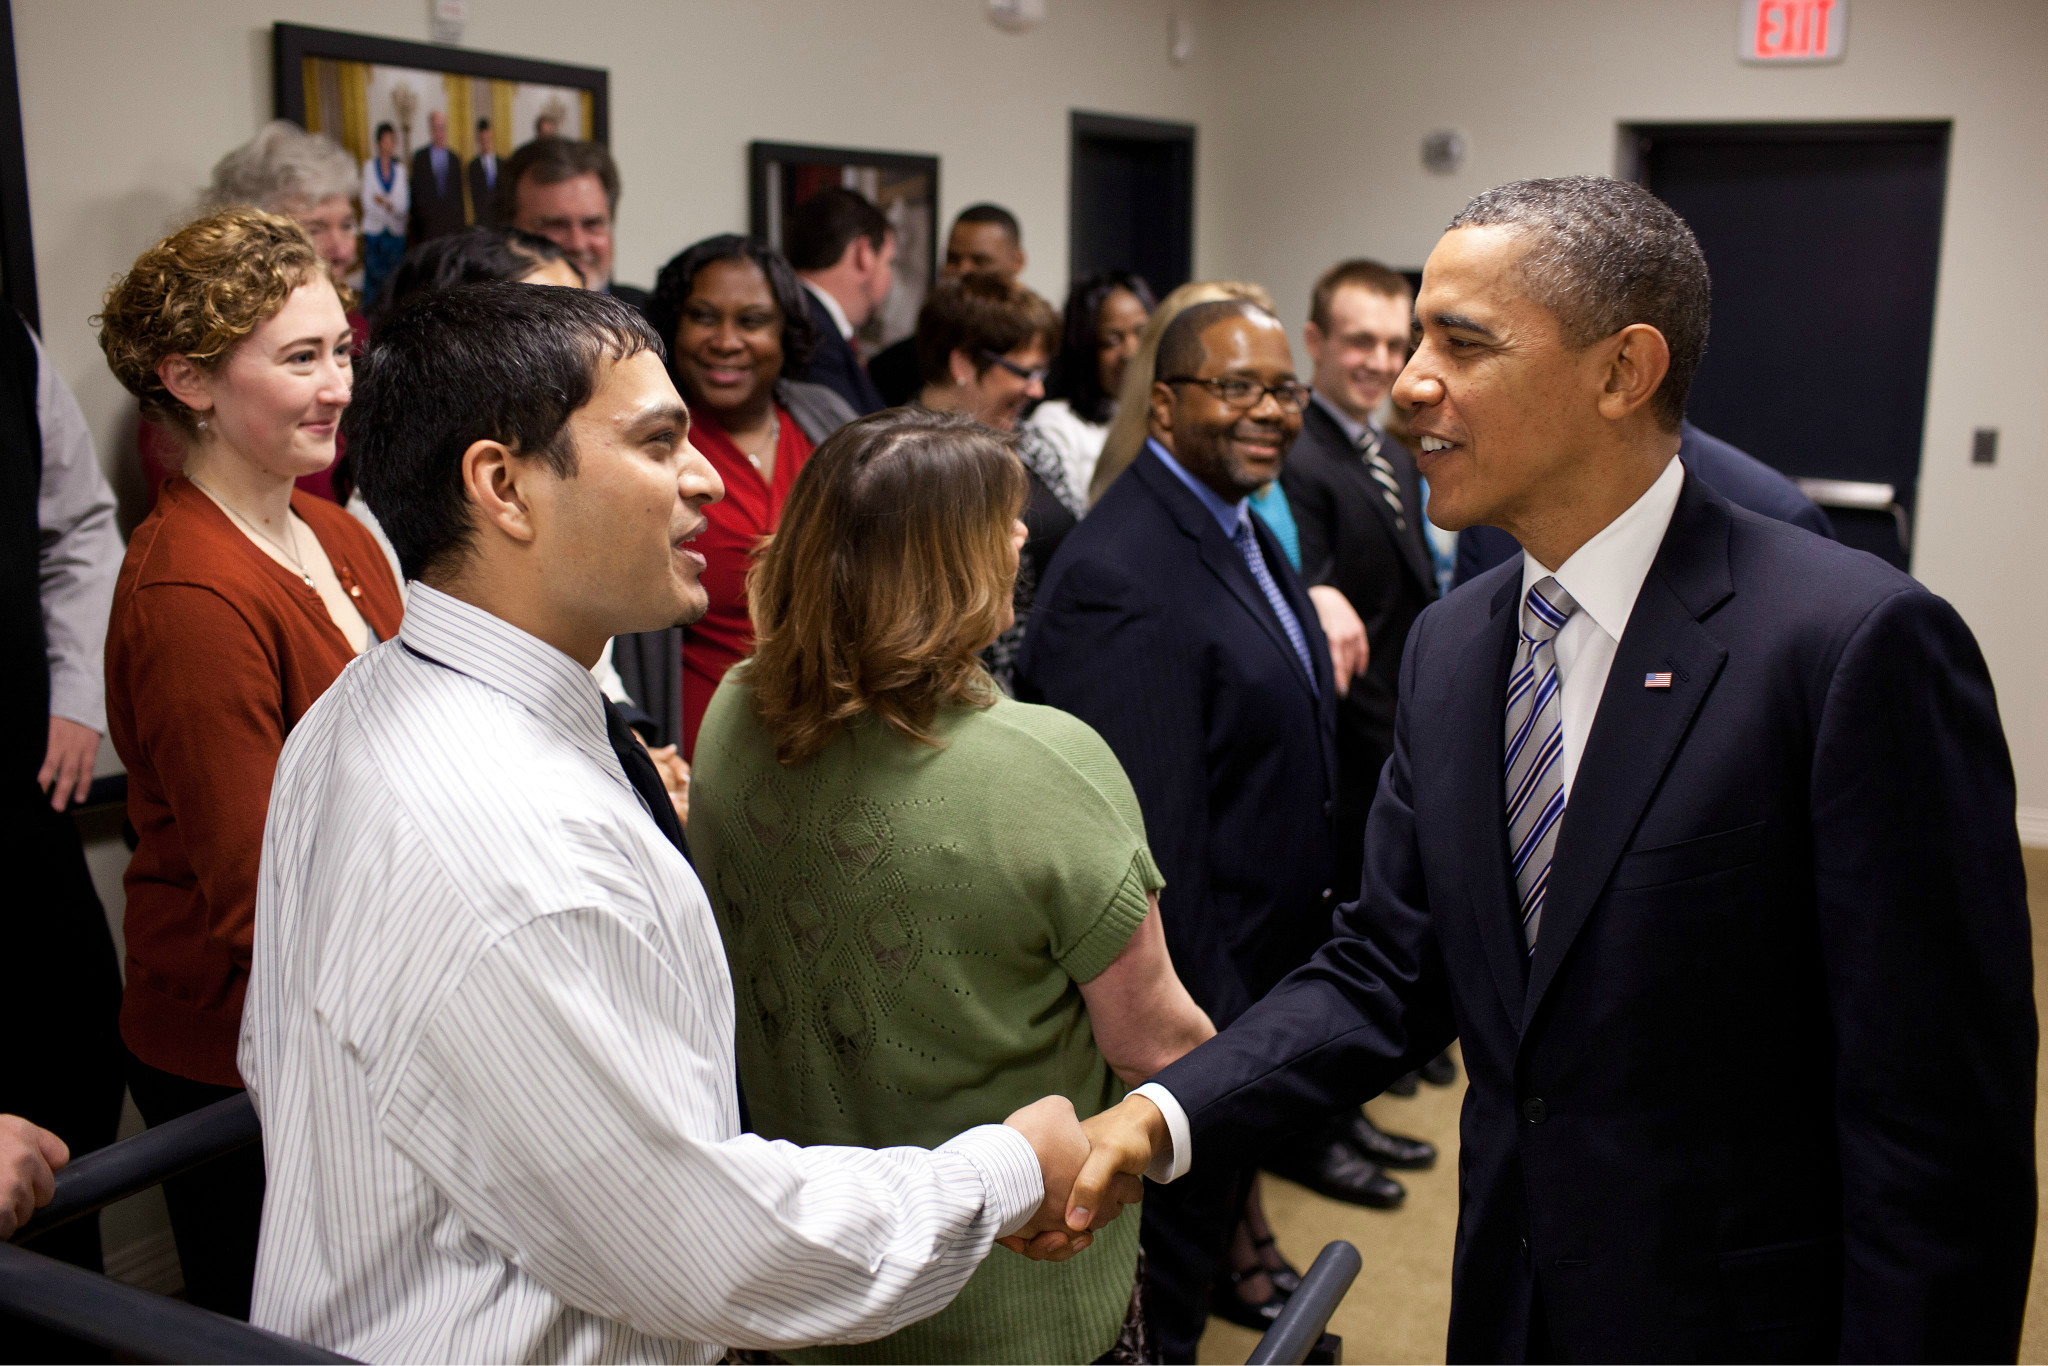 Meeting President Obama in 2012